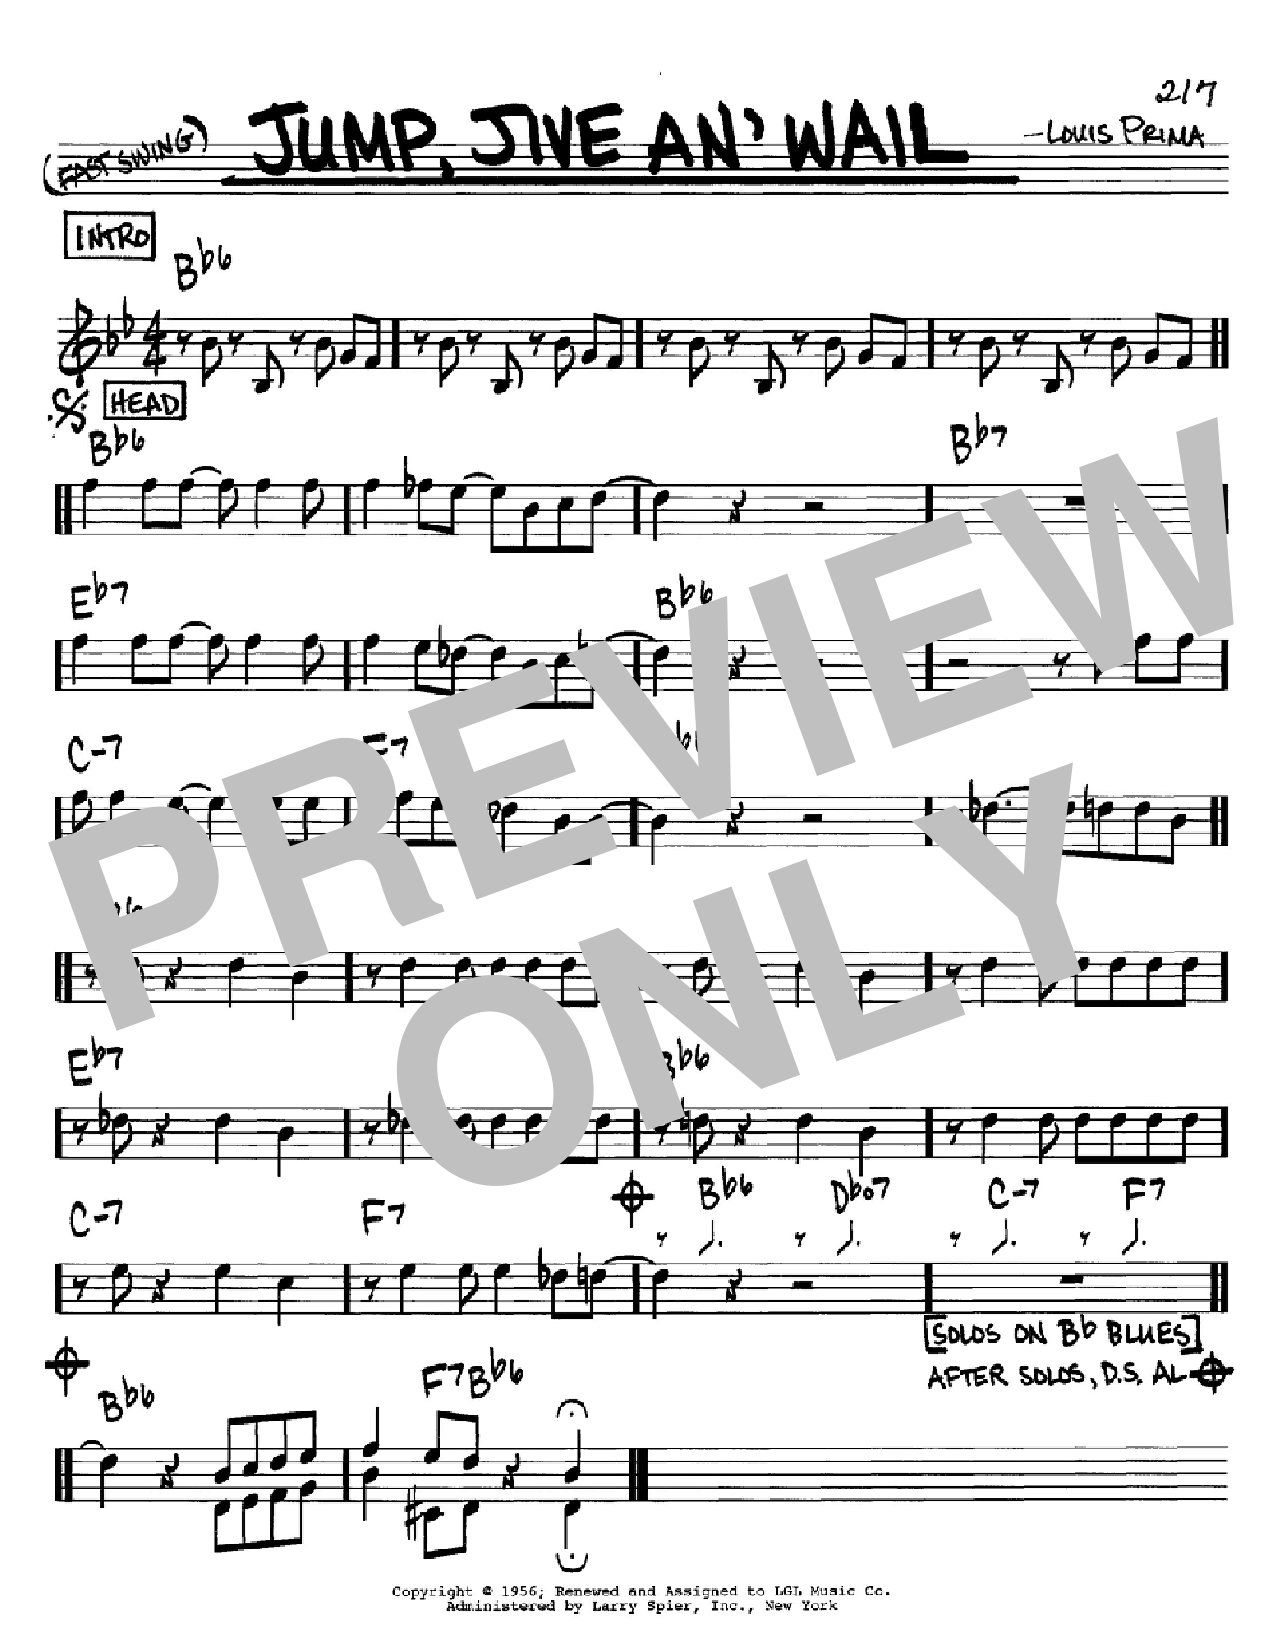 Louis Prima Jump, Jive An' Wail Sheet Music Notes & Chords for Real Book - Melody, Lyrics & Chords - C Instruments - Download or Print PDF